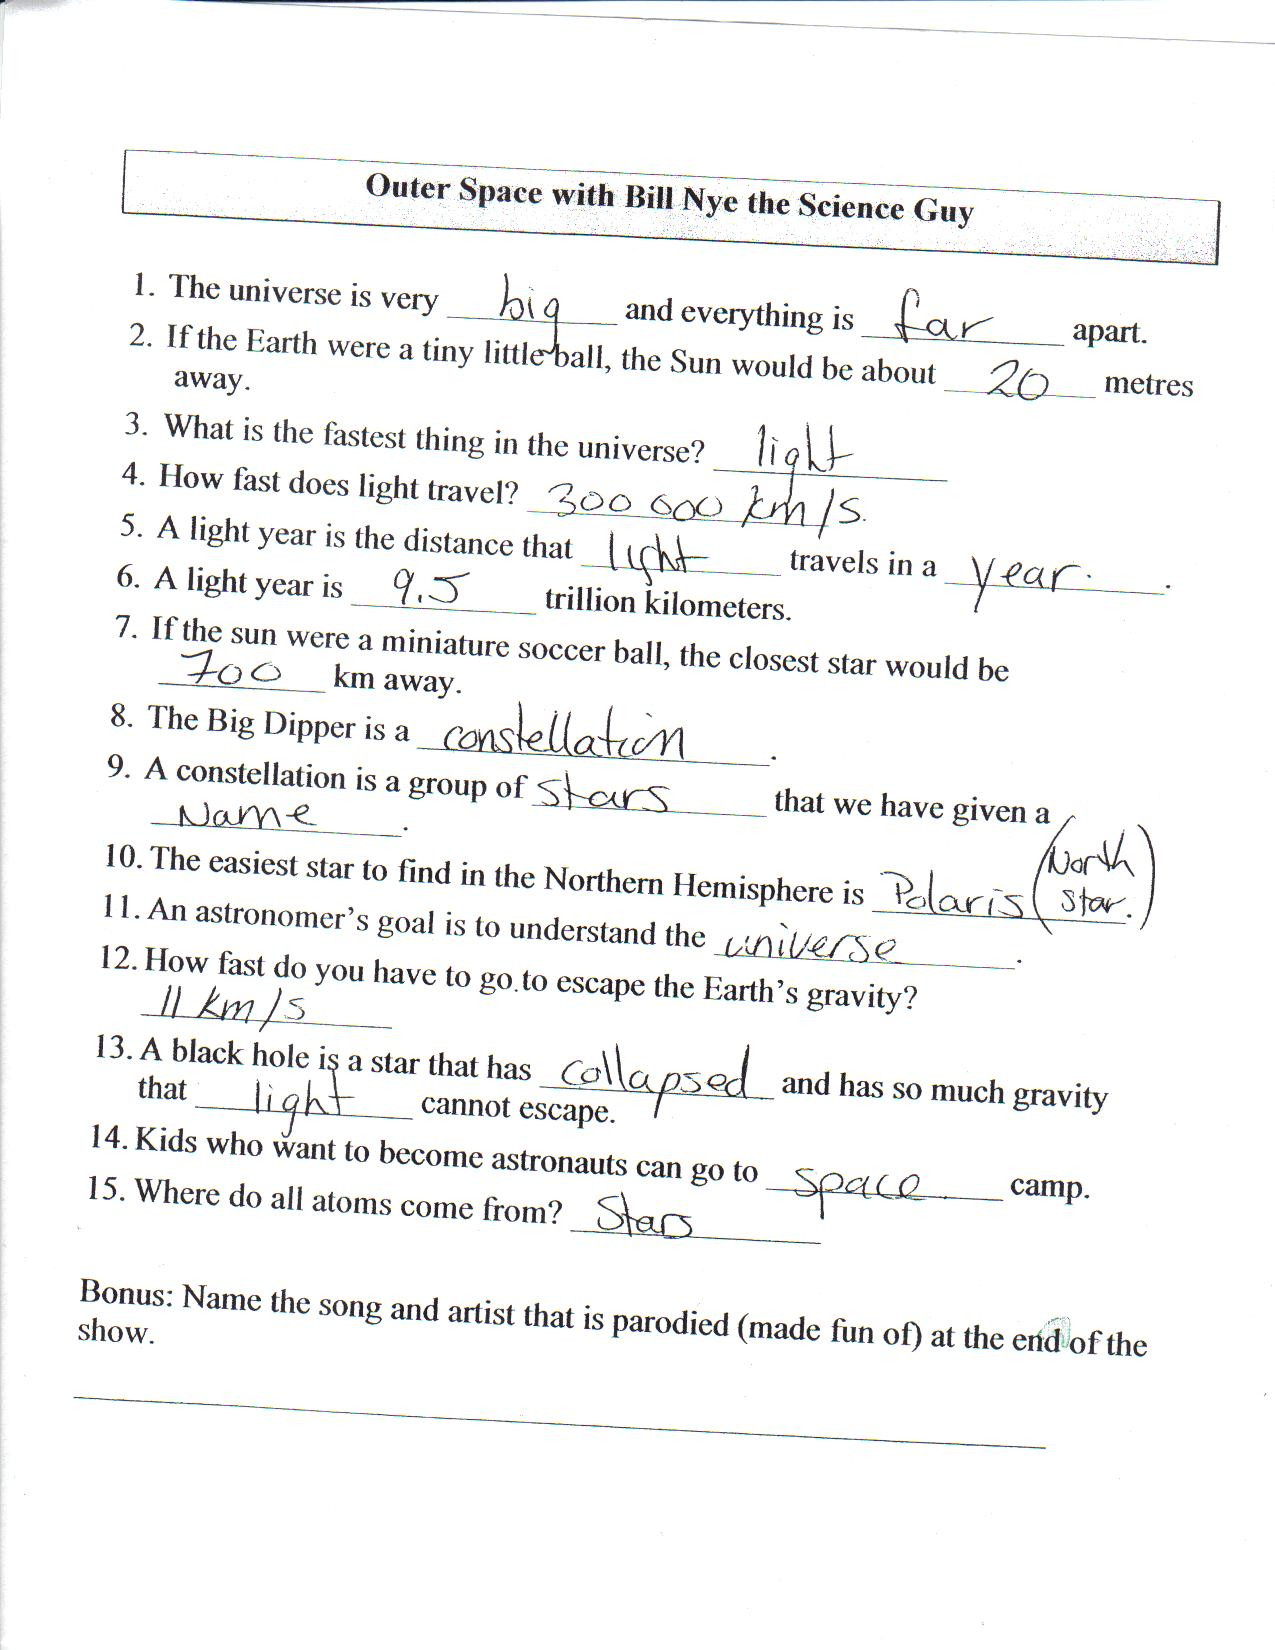 Bill Nye atoms Worksheet Answers 35 Bill Nye Ets and Meteors Worksheet Answers Worksheet